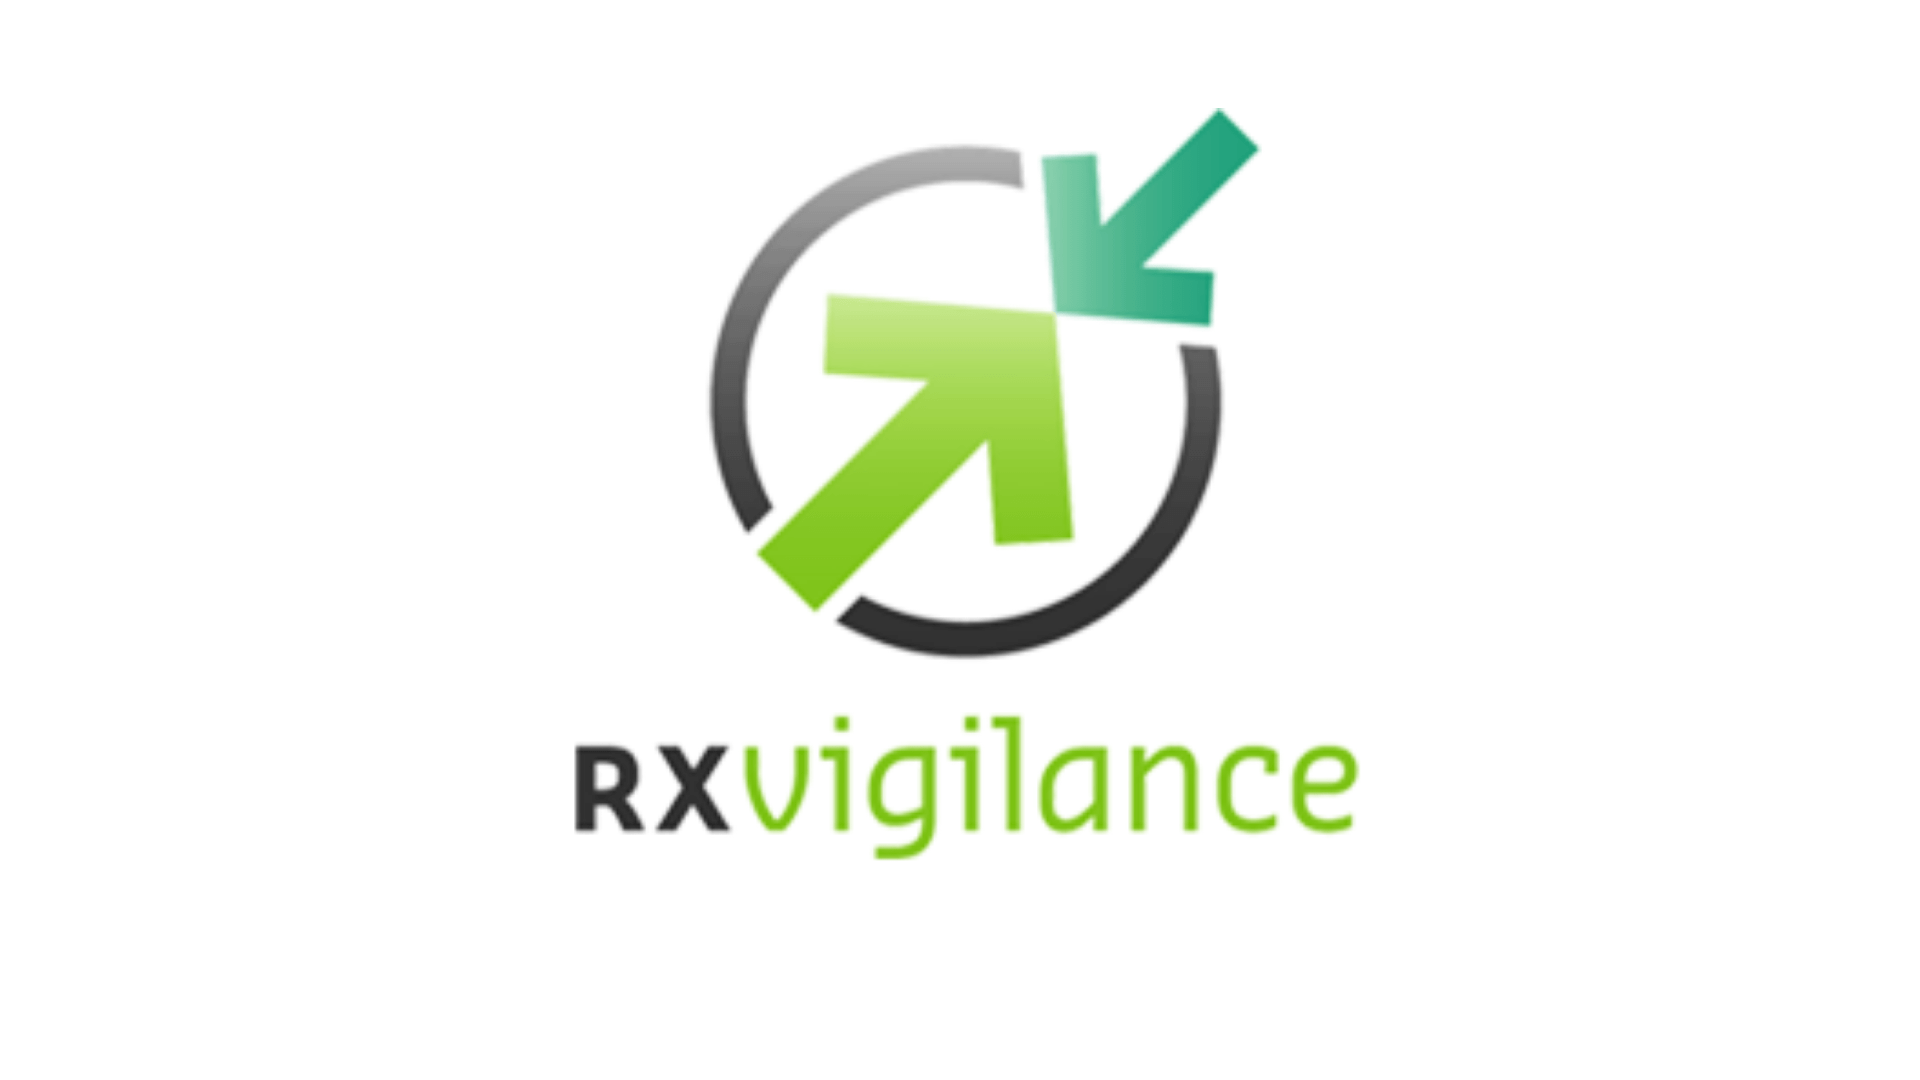 RxVigilance